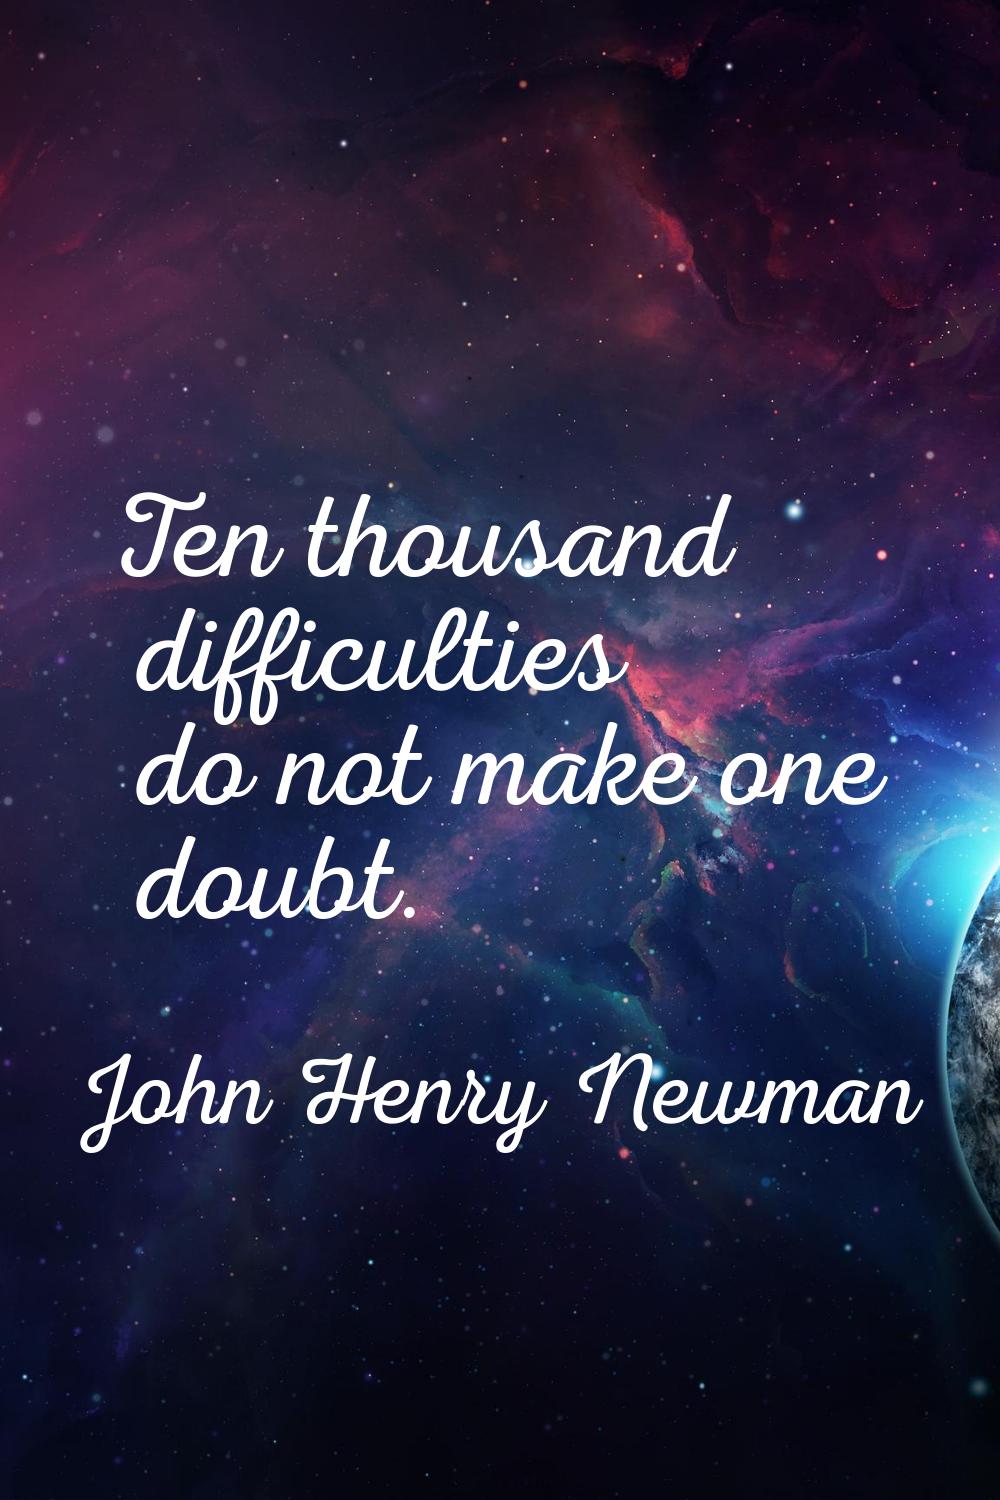 Ten thousand difficulties do not make one doubt.